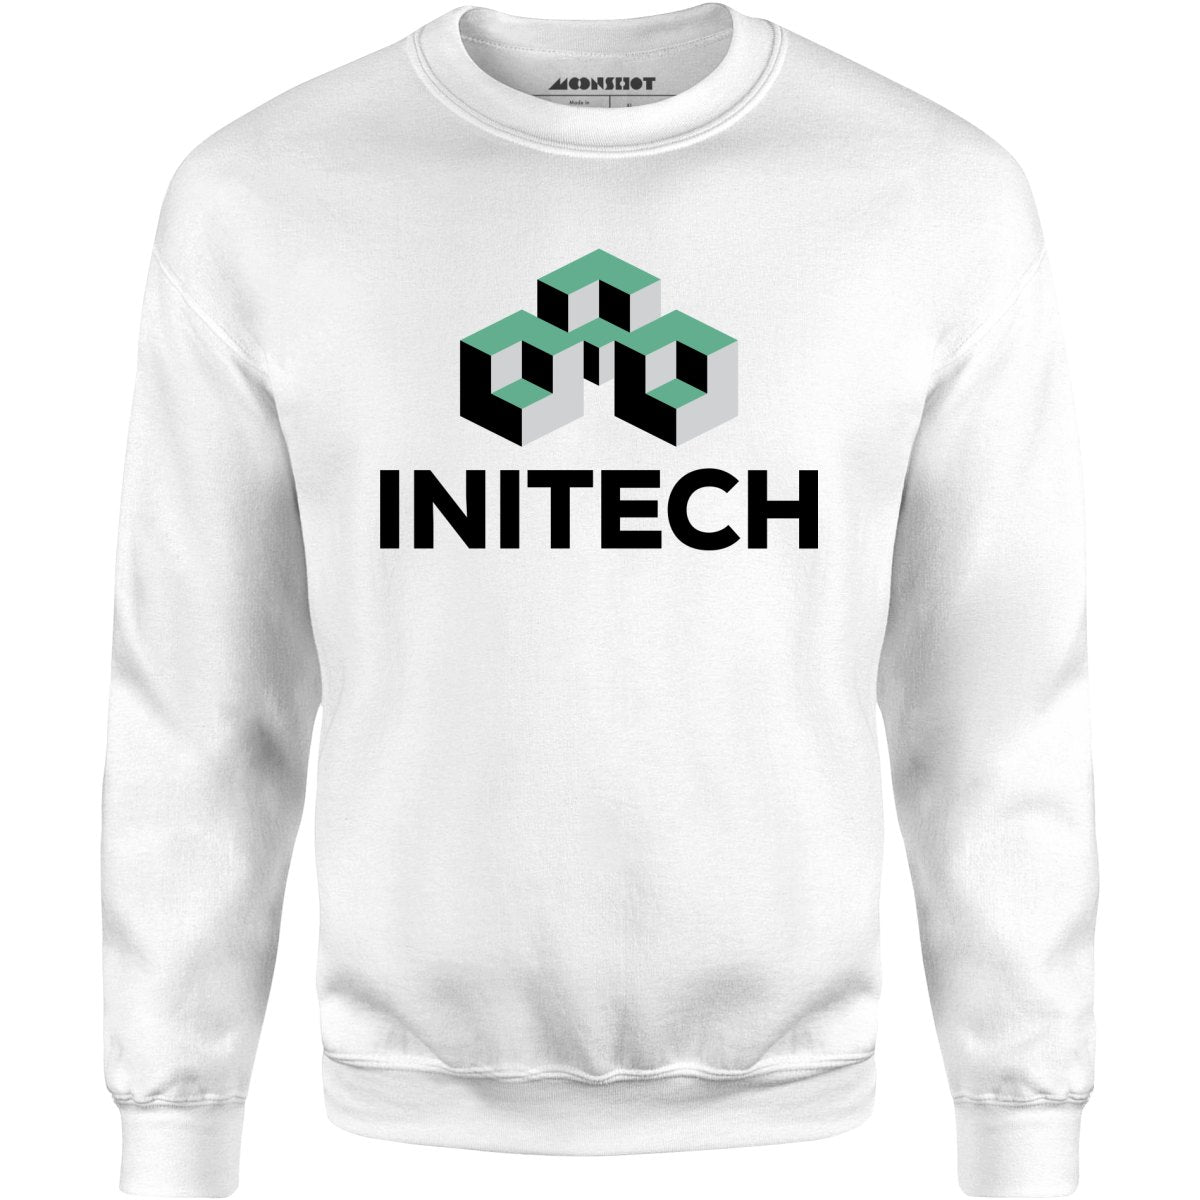 Initech Office Space - Unisex Sweatshirt